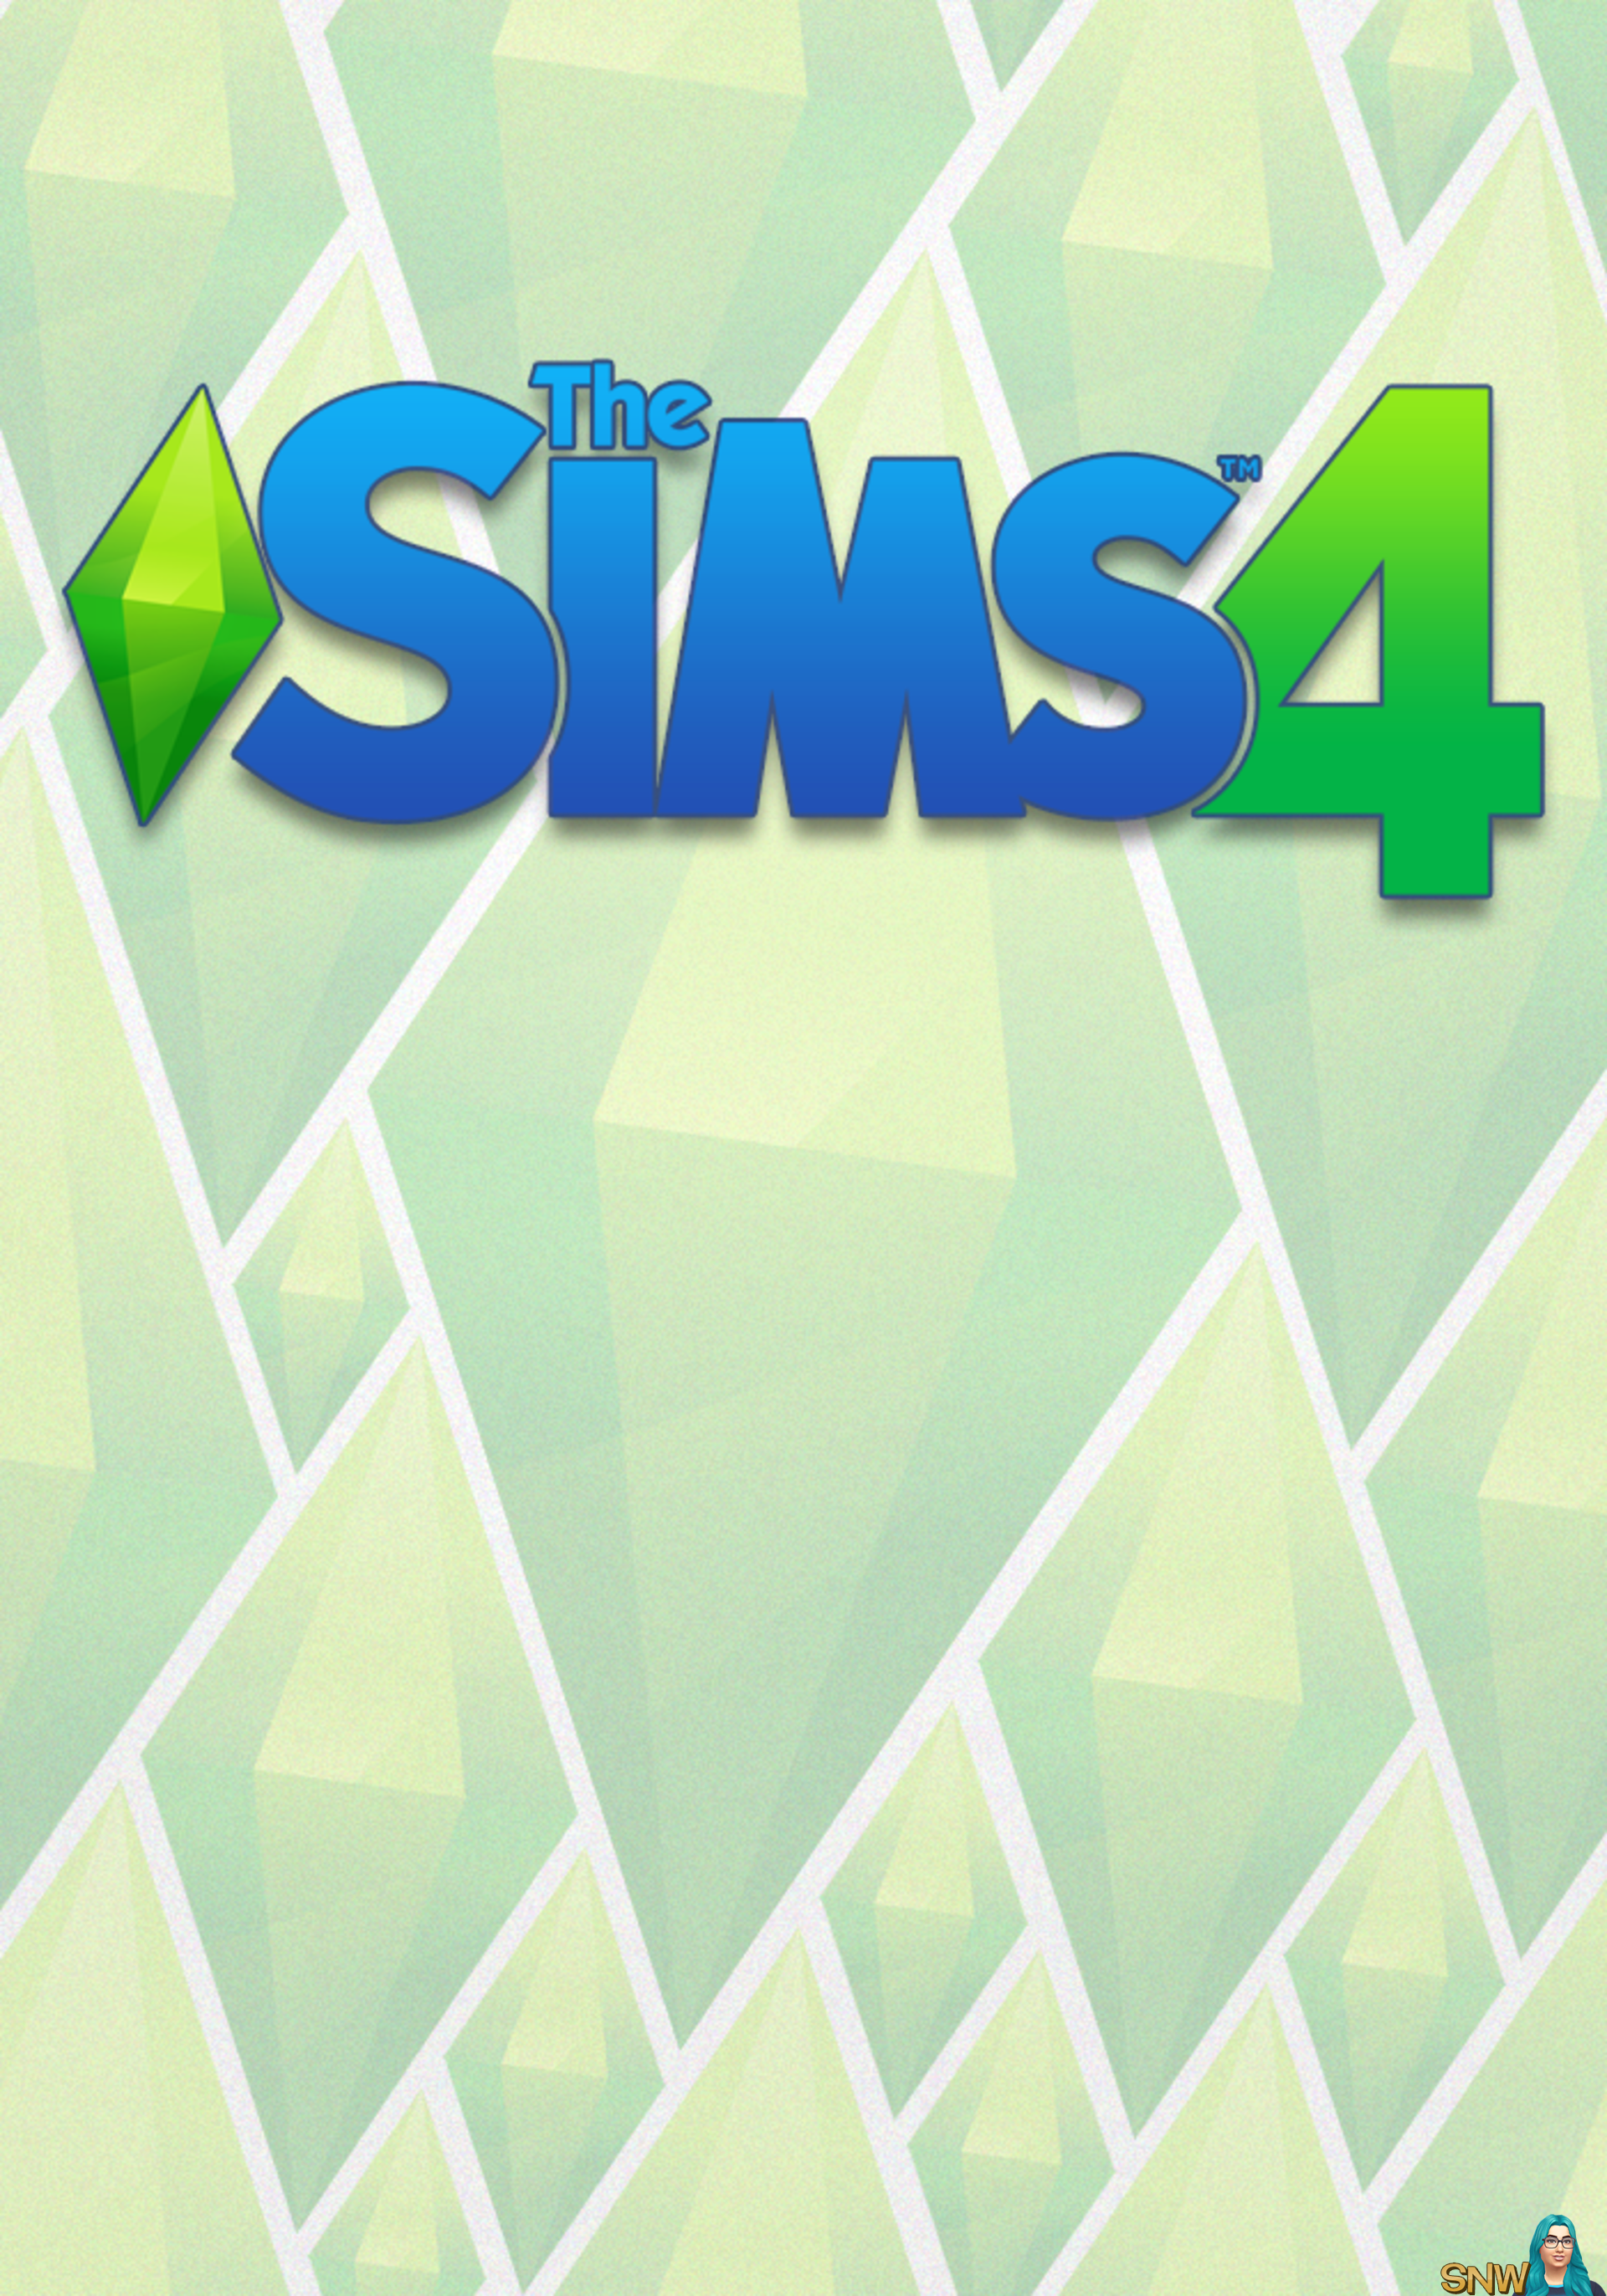 New Sims 4 logo and temporary box art.